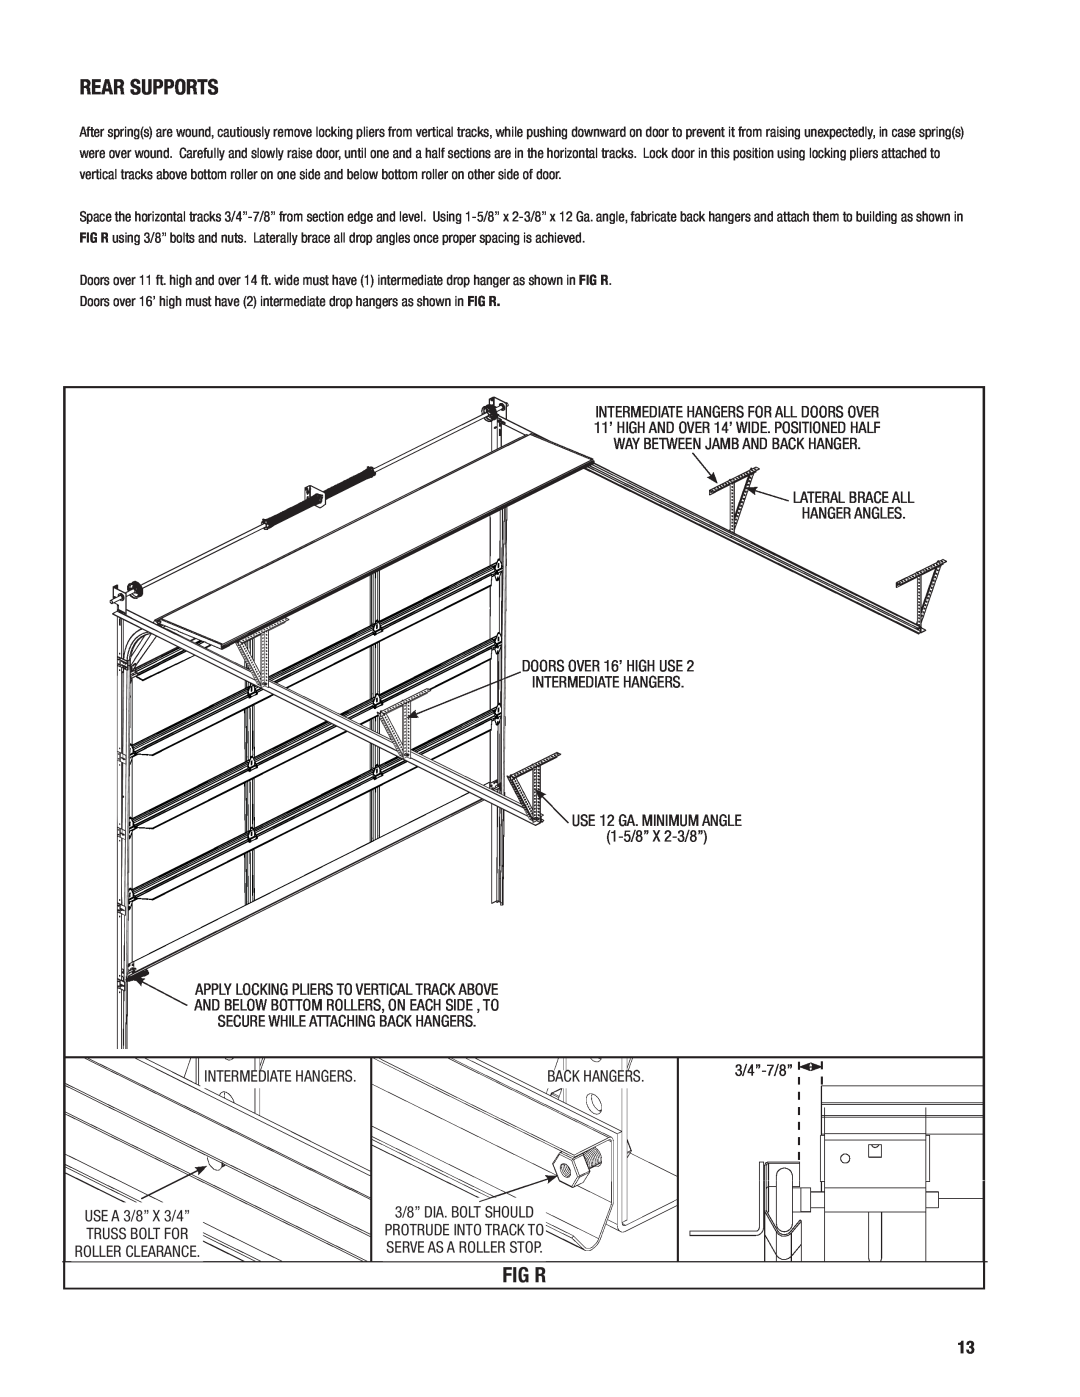 Wayne-Dalton 452, 451 installation instructions Rear Supports, Fig R, Back Hangers 